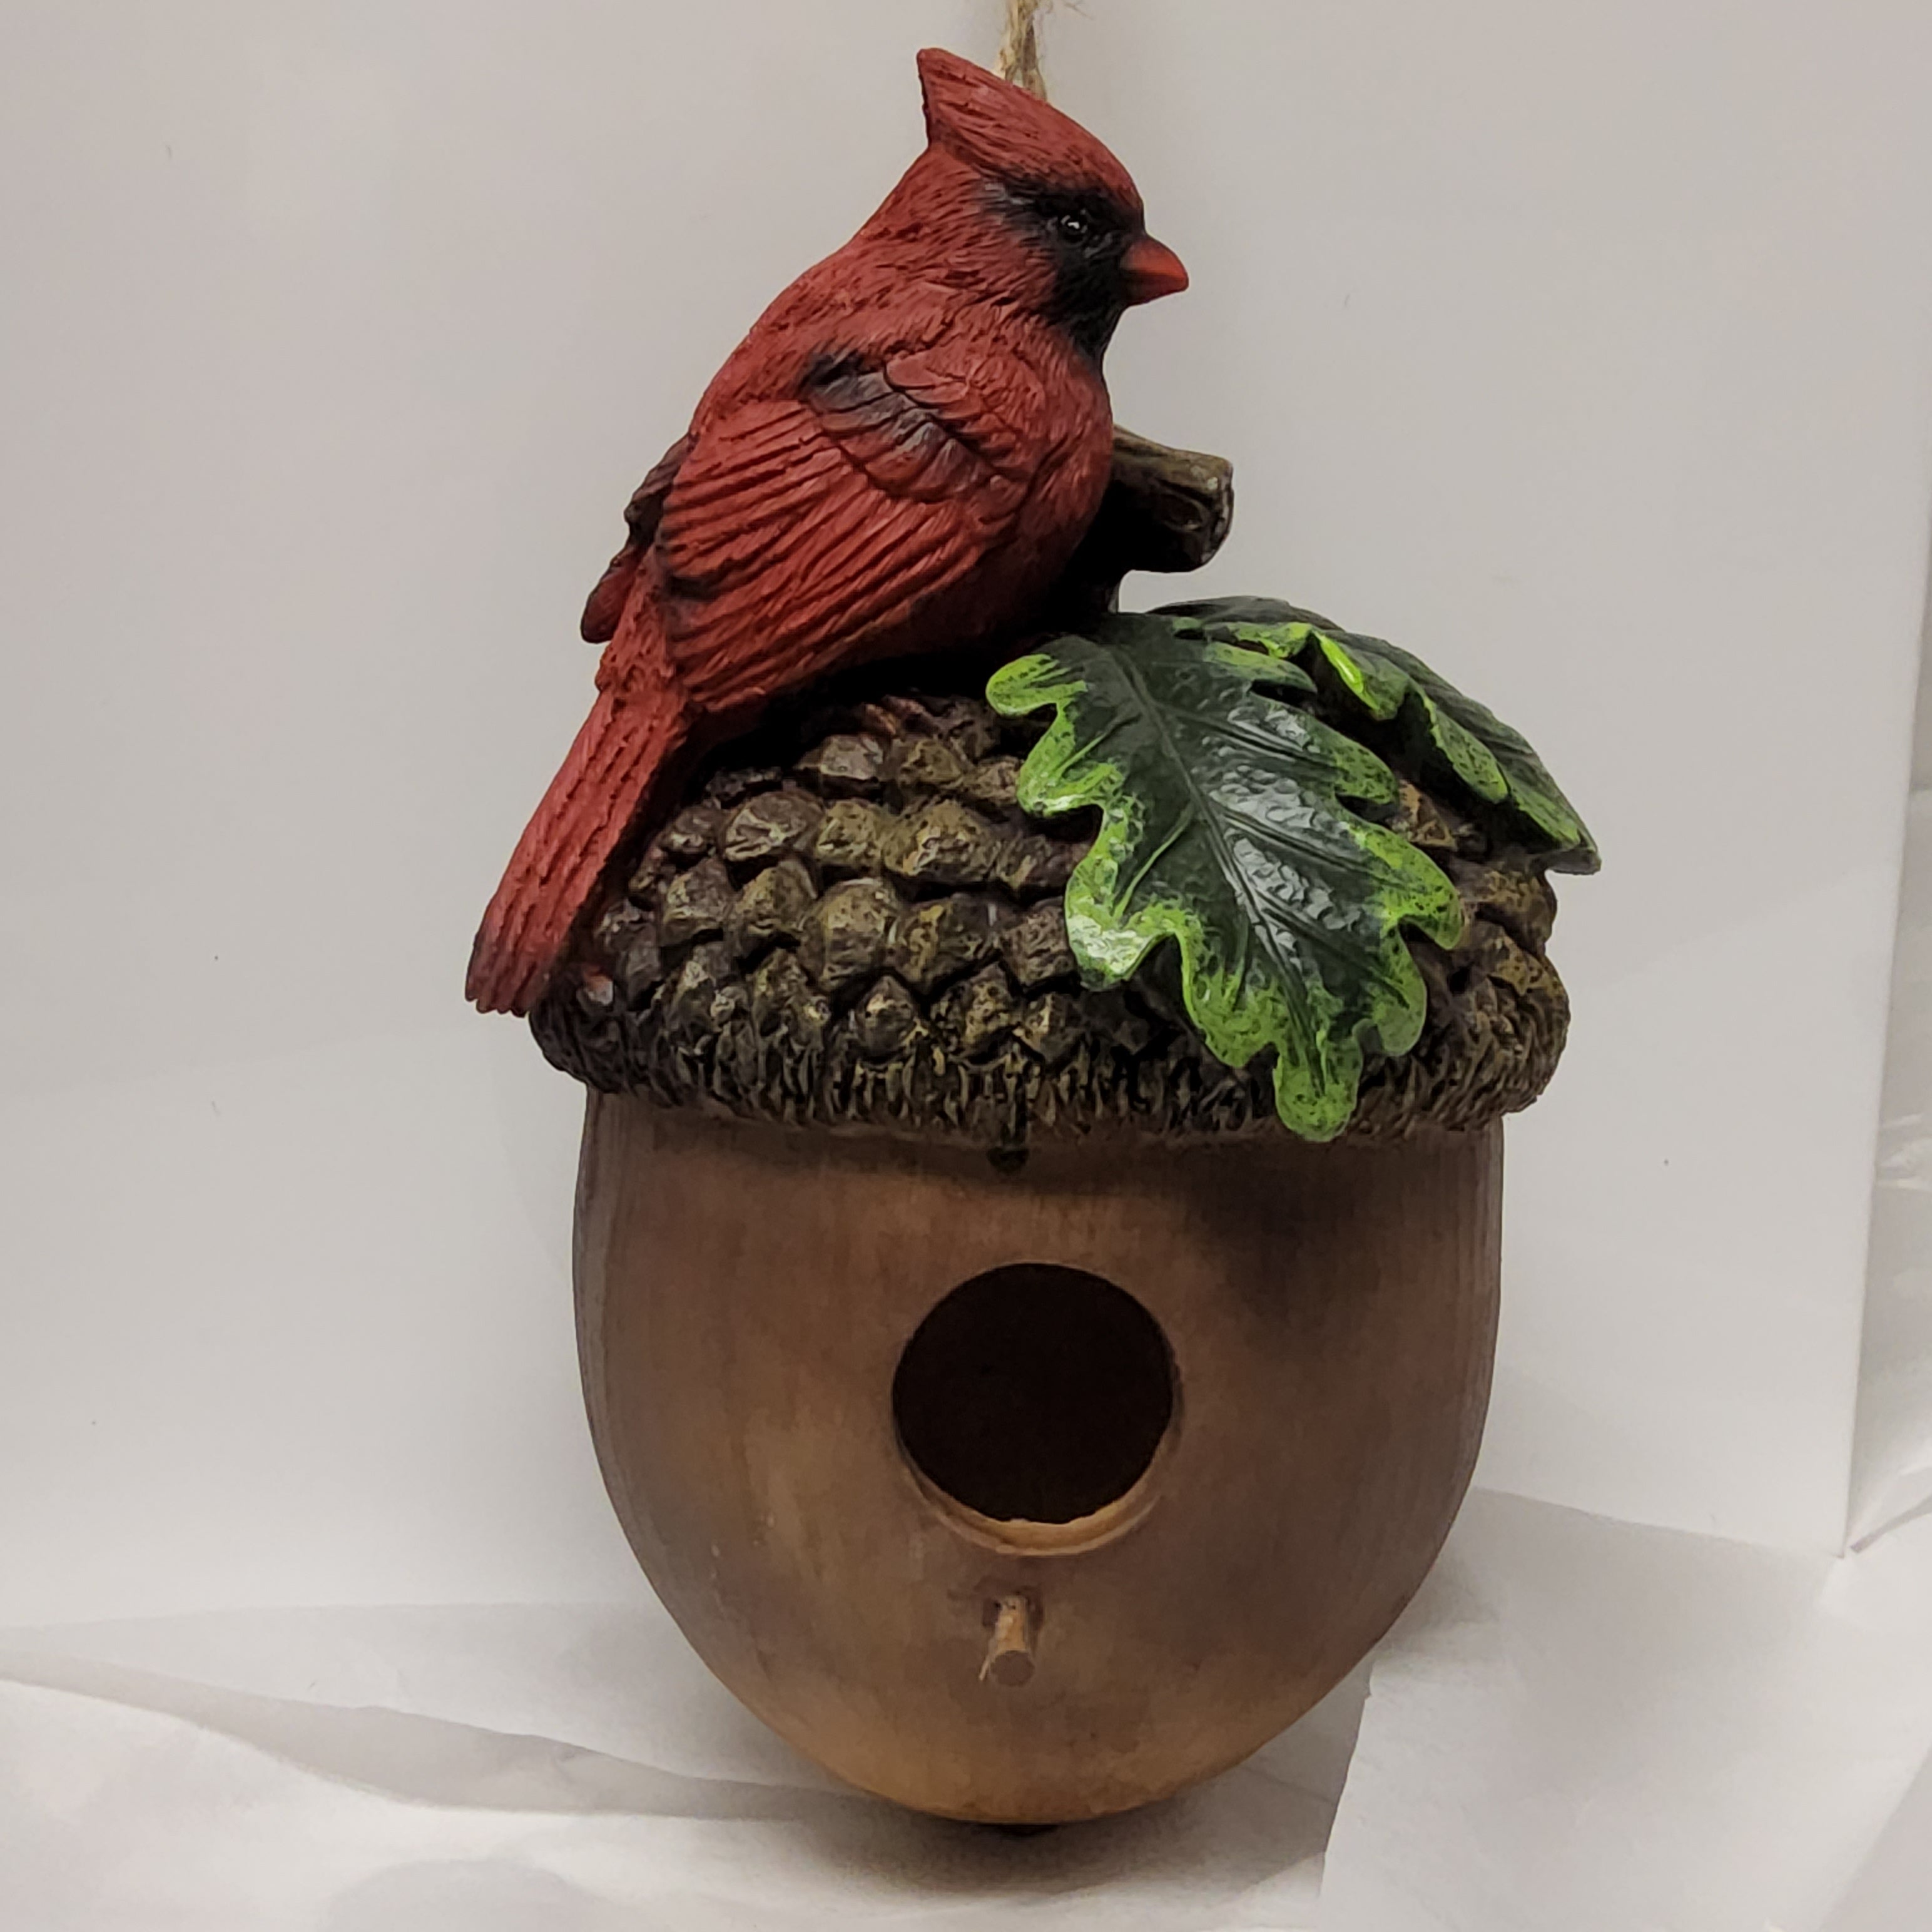 Birdhouse - Decorative Acorn Style with Cardinal QM42401